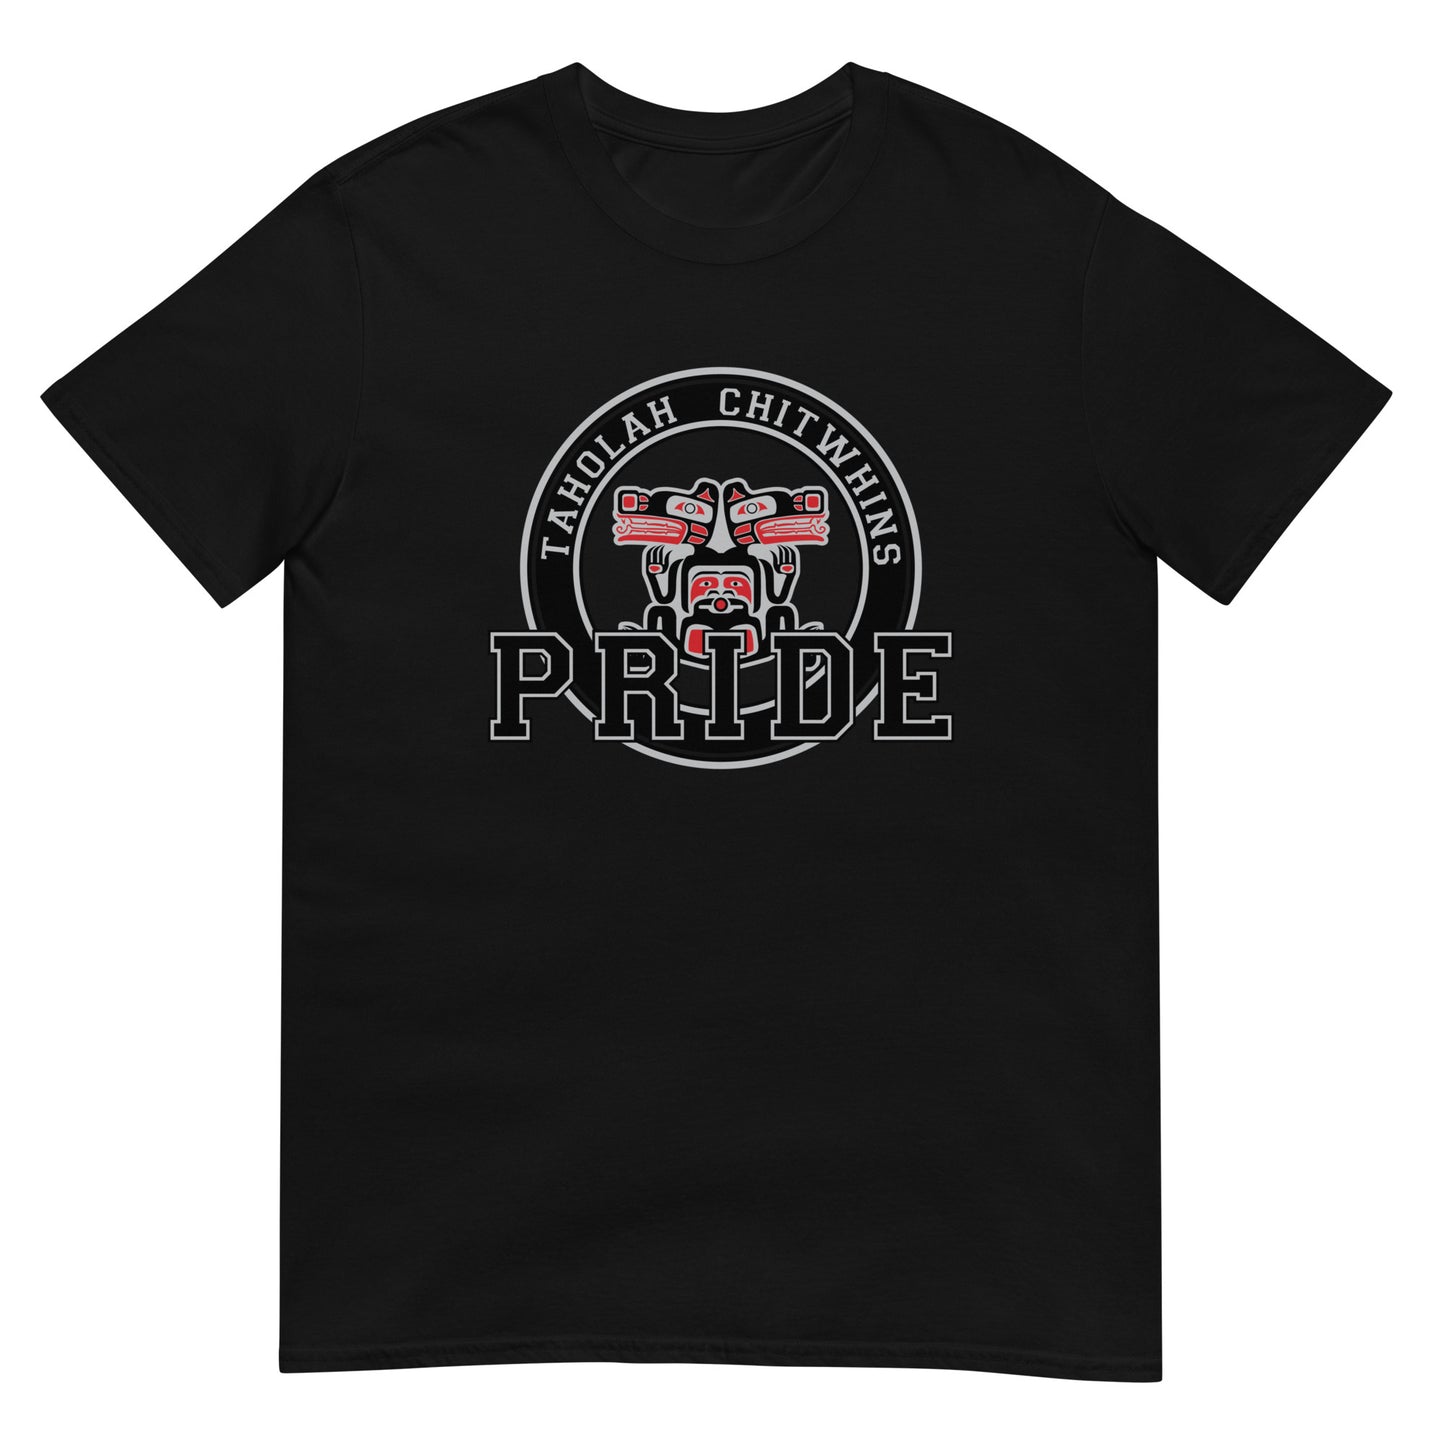 Taholah Chitwhins Pride Short-Sleeve Unisex T-Shirt